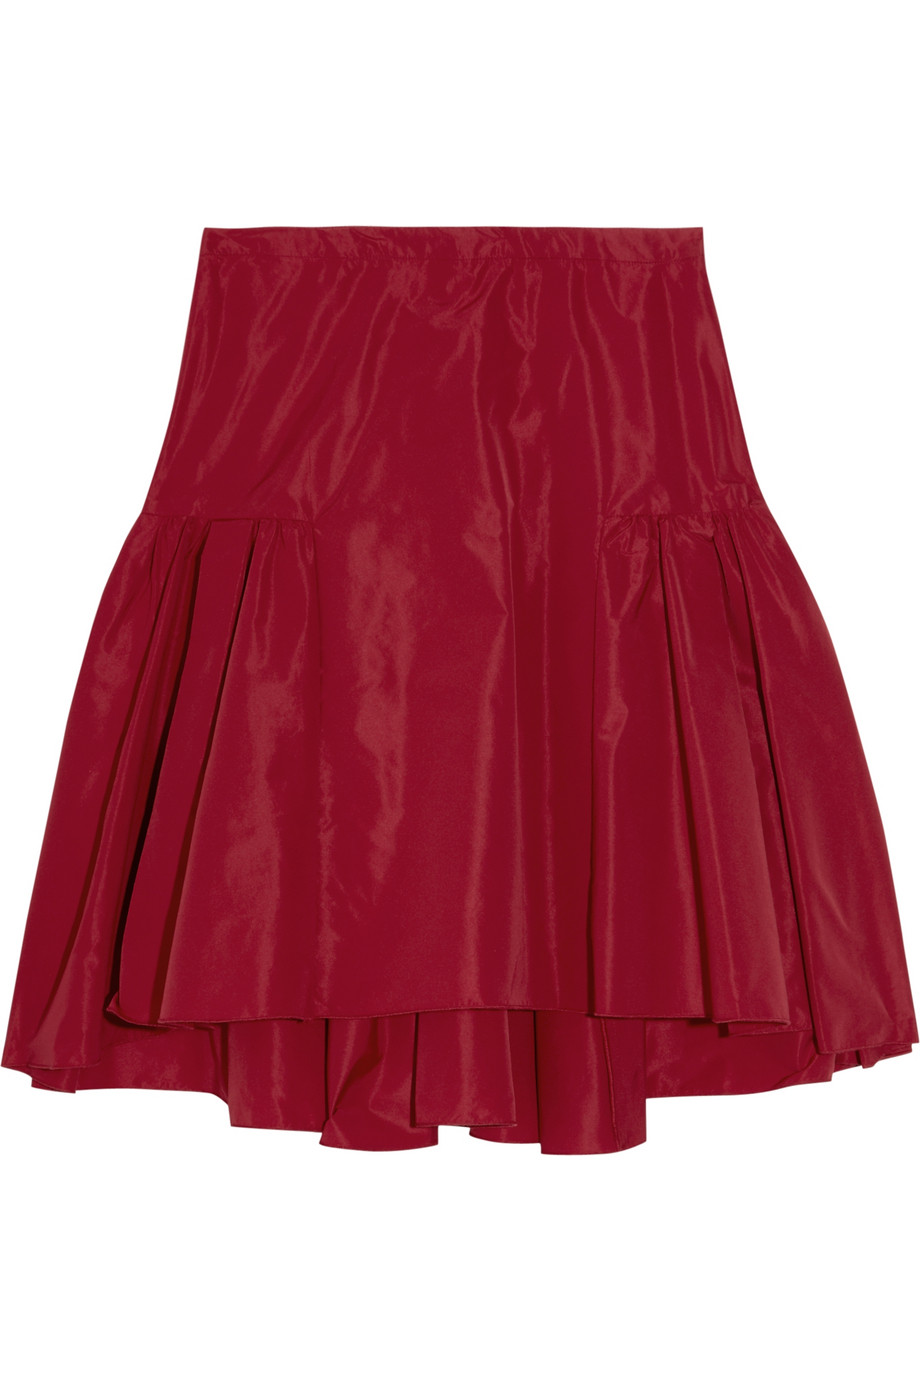 Red Taffeta Skirt 31